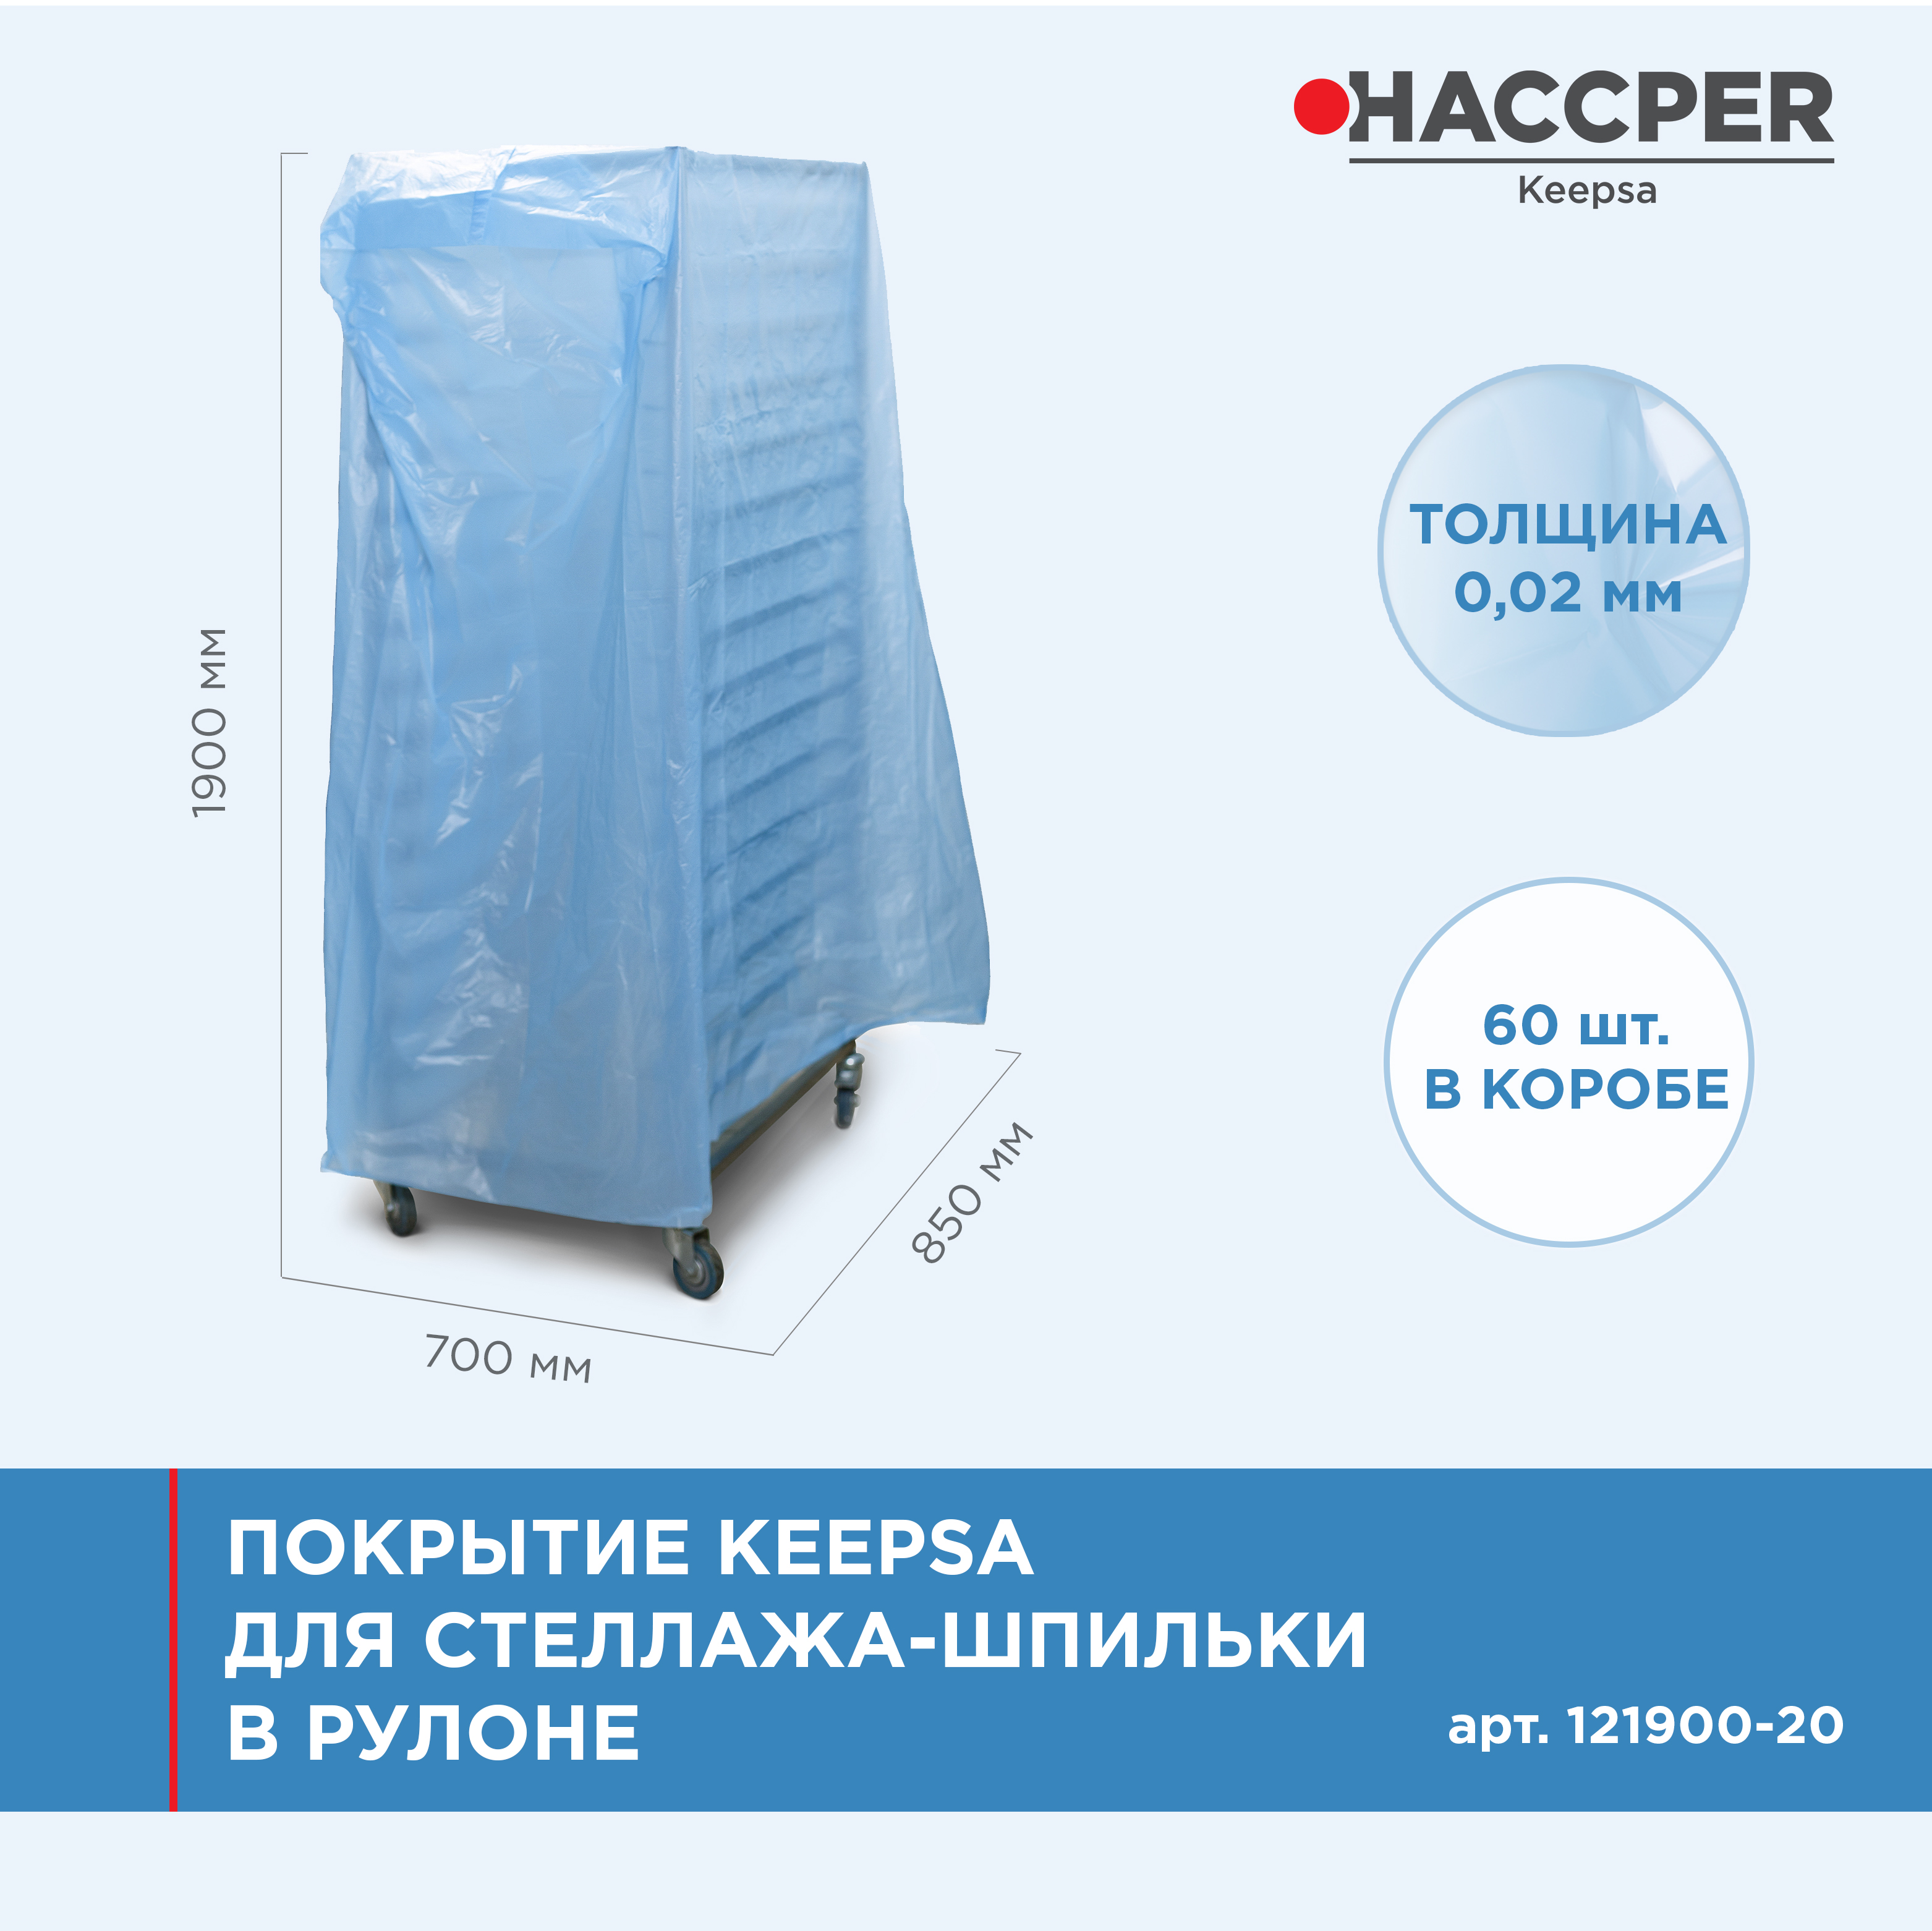 Покрытие HACCPER Keepsa для стеллажа-шпильки, 850х700х1900 мм